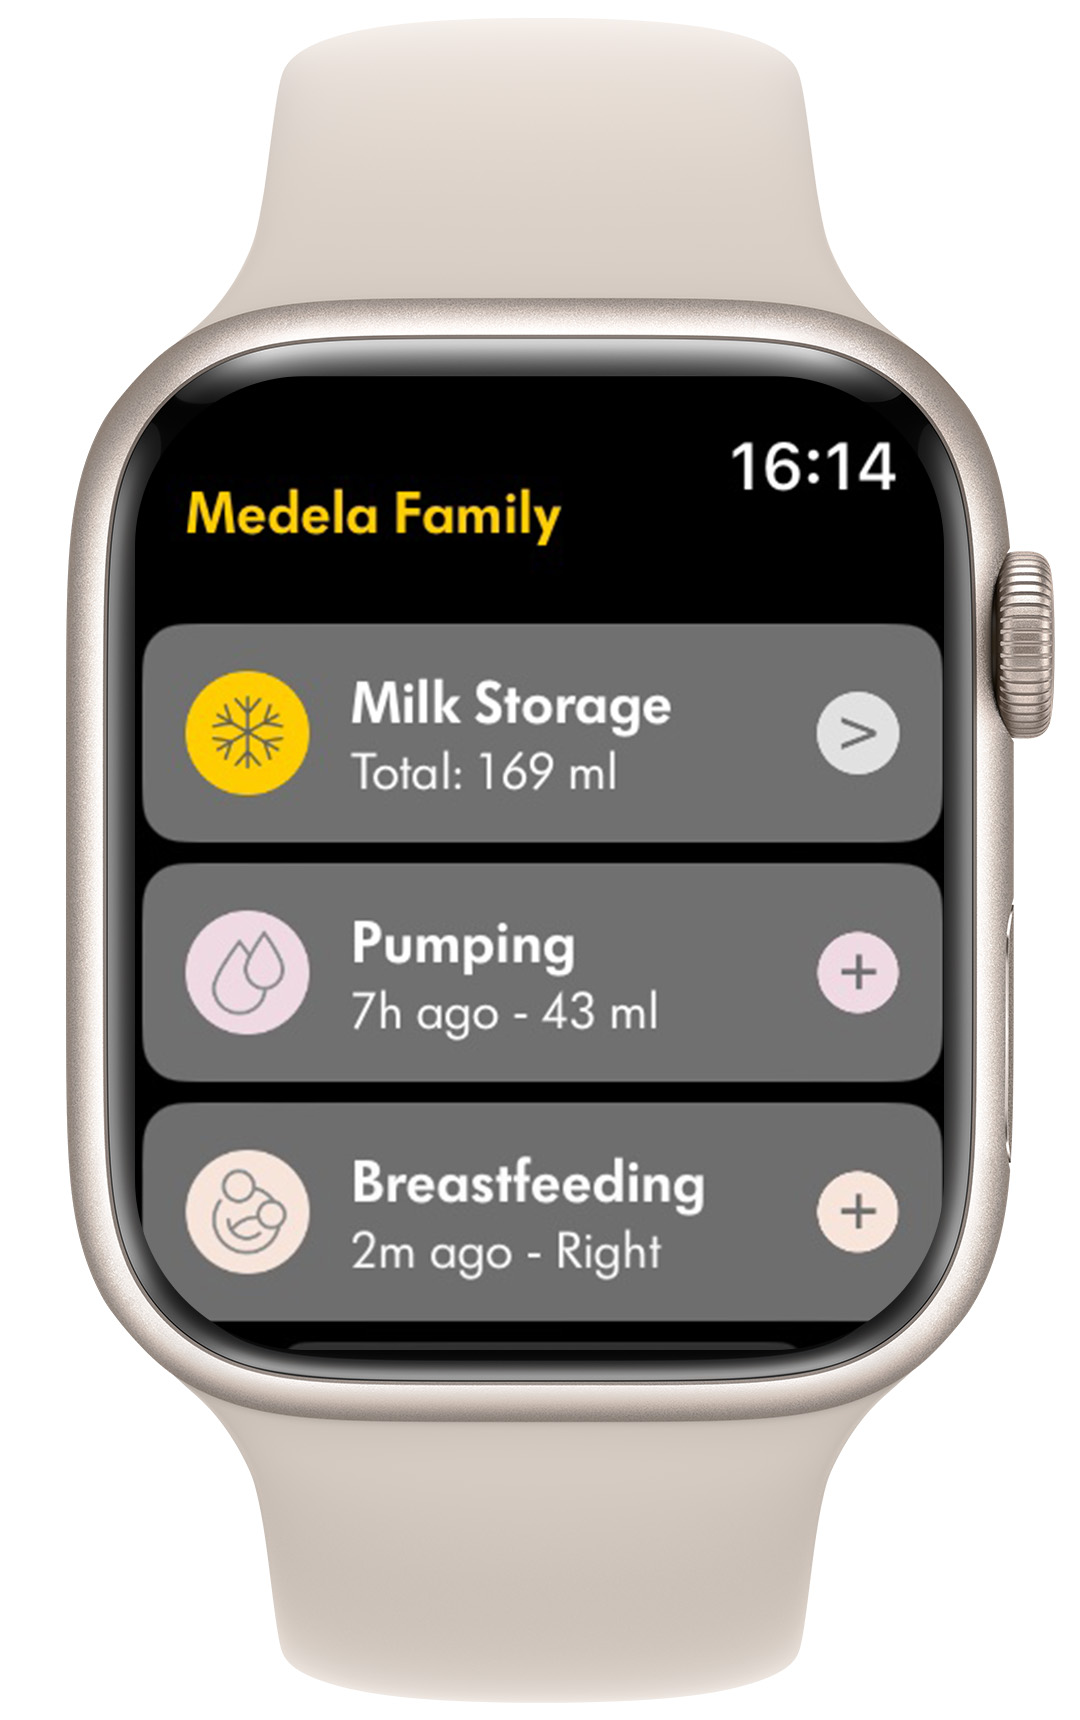 Medela Family Smart Watch app